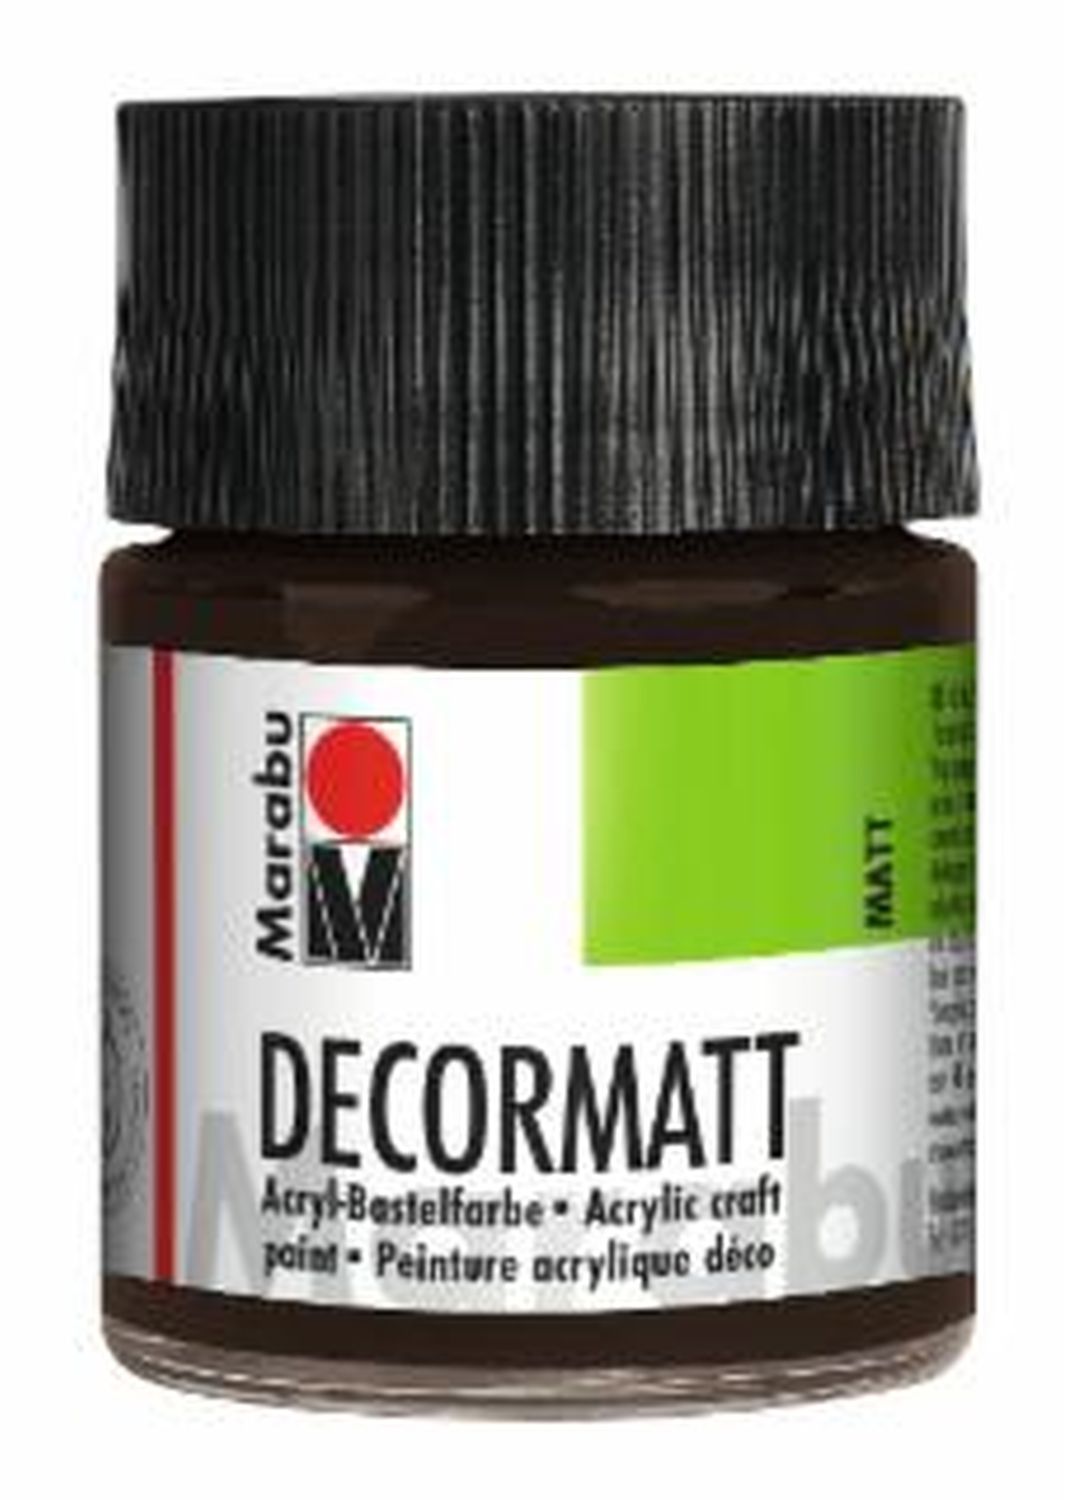 Decormatt Acryl - Dunkelbraun 045, 50 ml